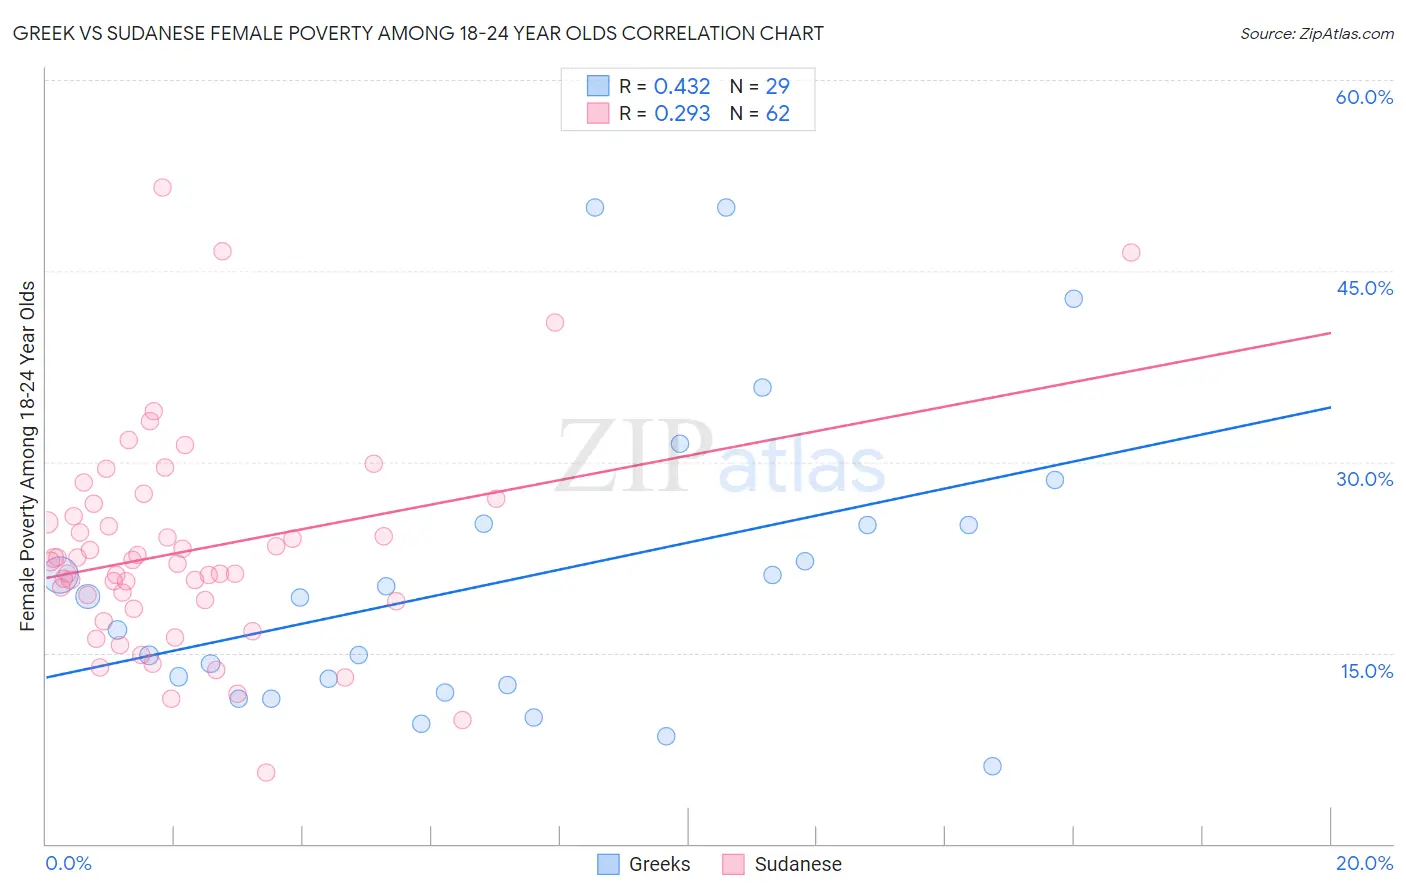 Greek vs Sudanese Female Poverty Among 18-24 Year Olds